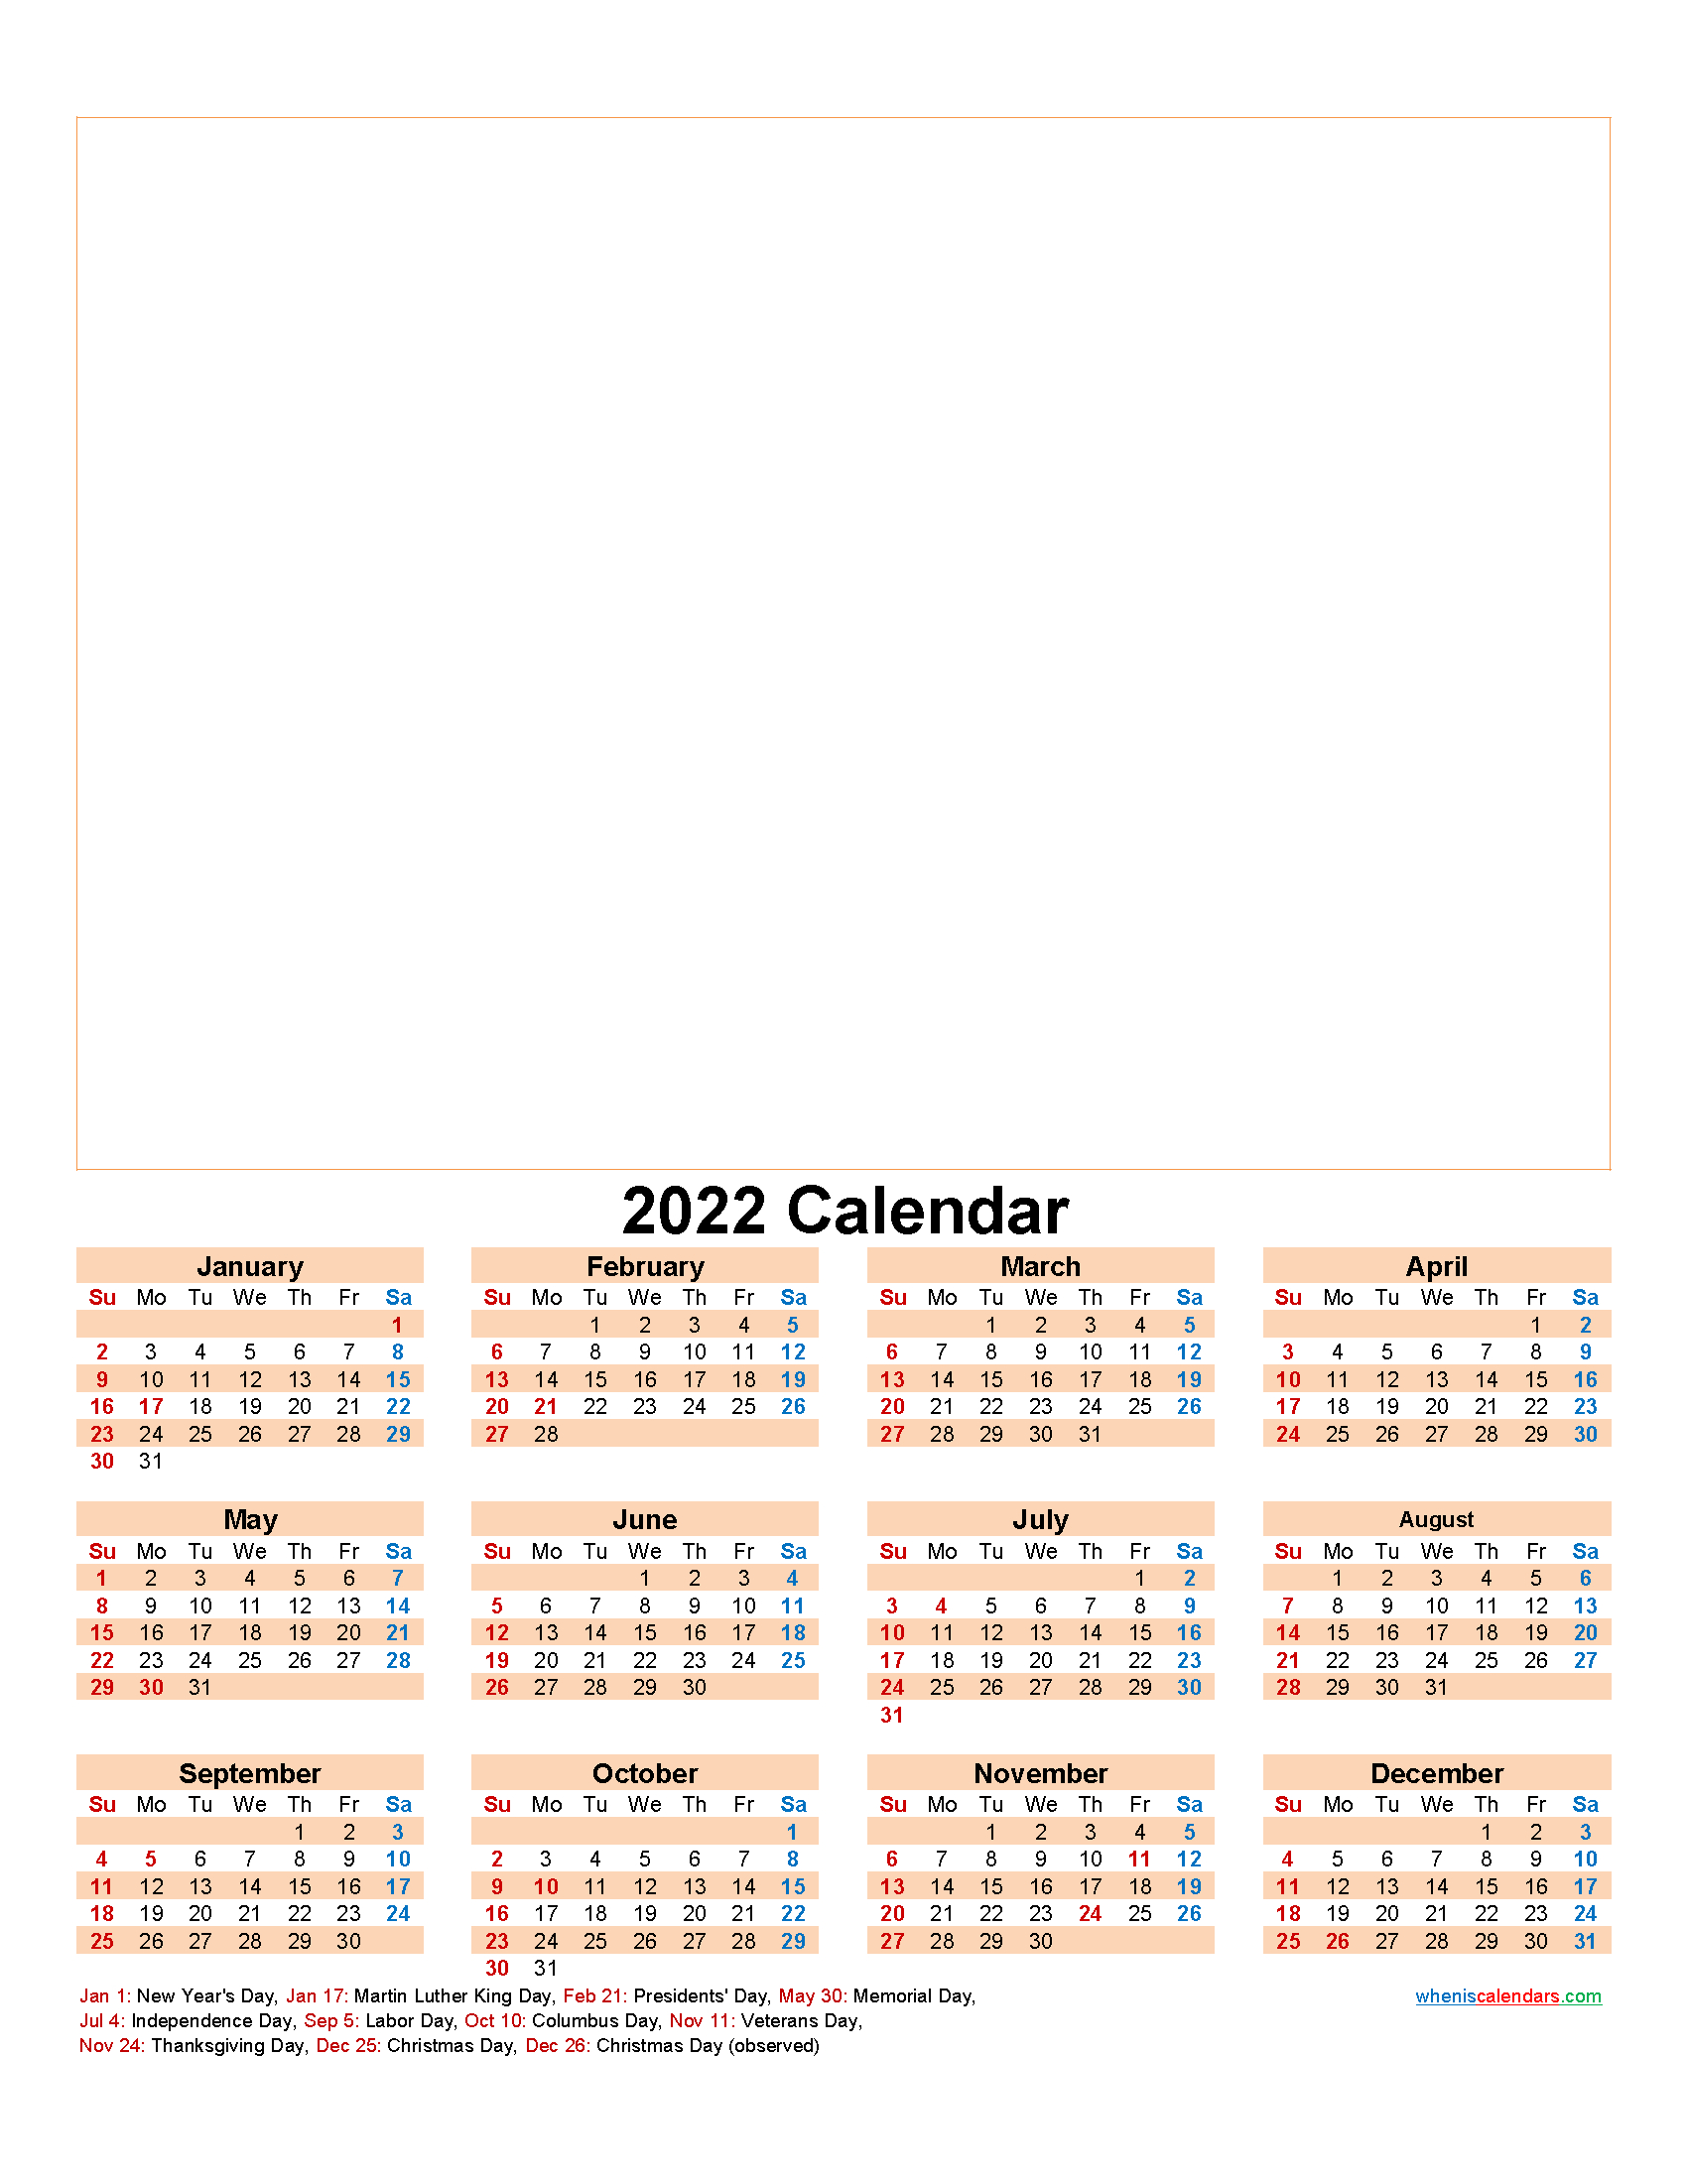 List Of Make Your Own Photo Calendar 2022 Photos - Custom Desk Calendar-Make Your Own Calendar 2022